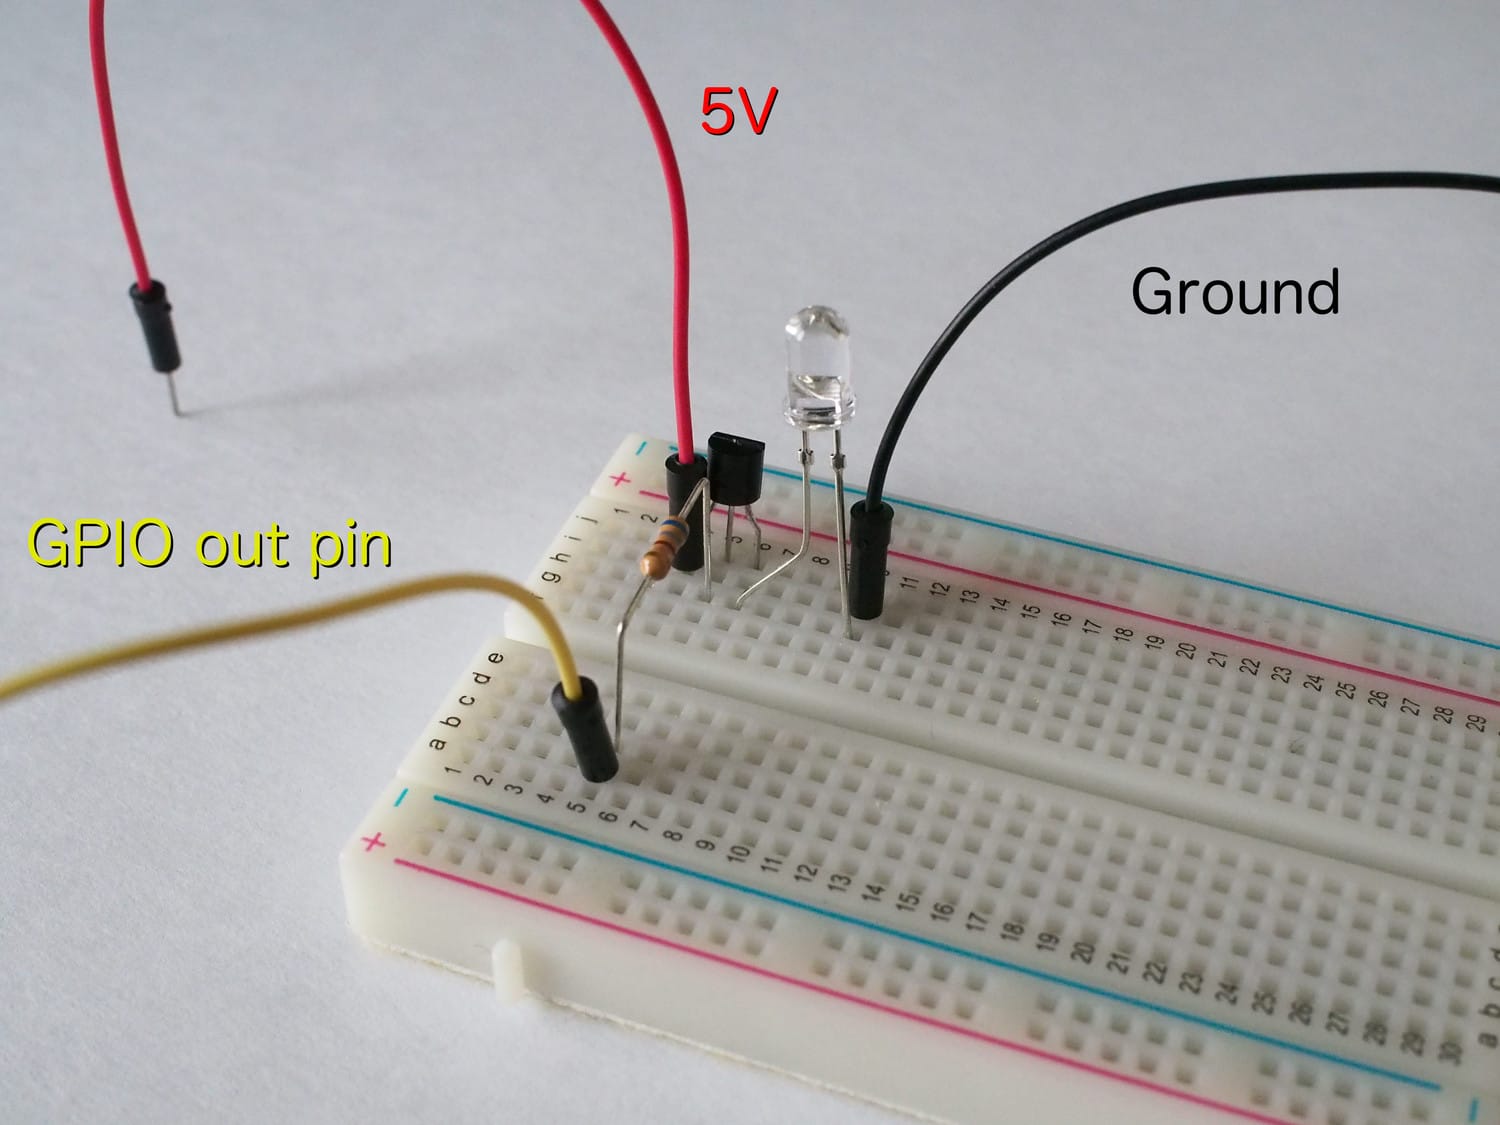 LED circuit on a solderless breadboard